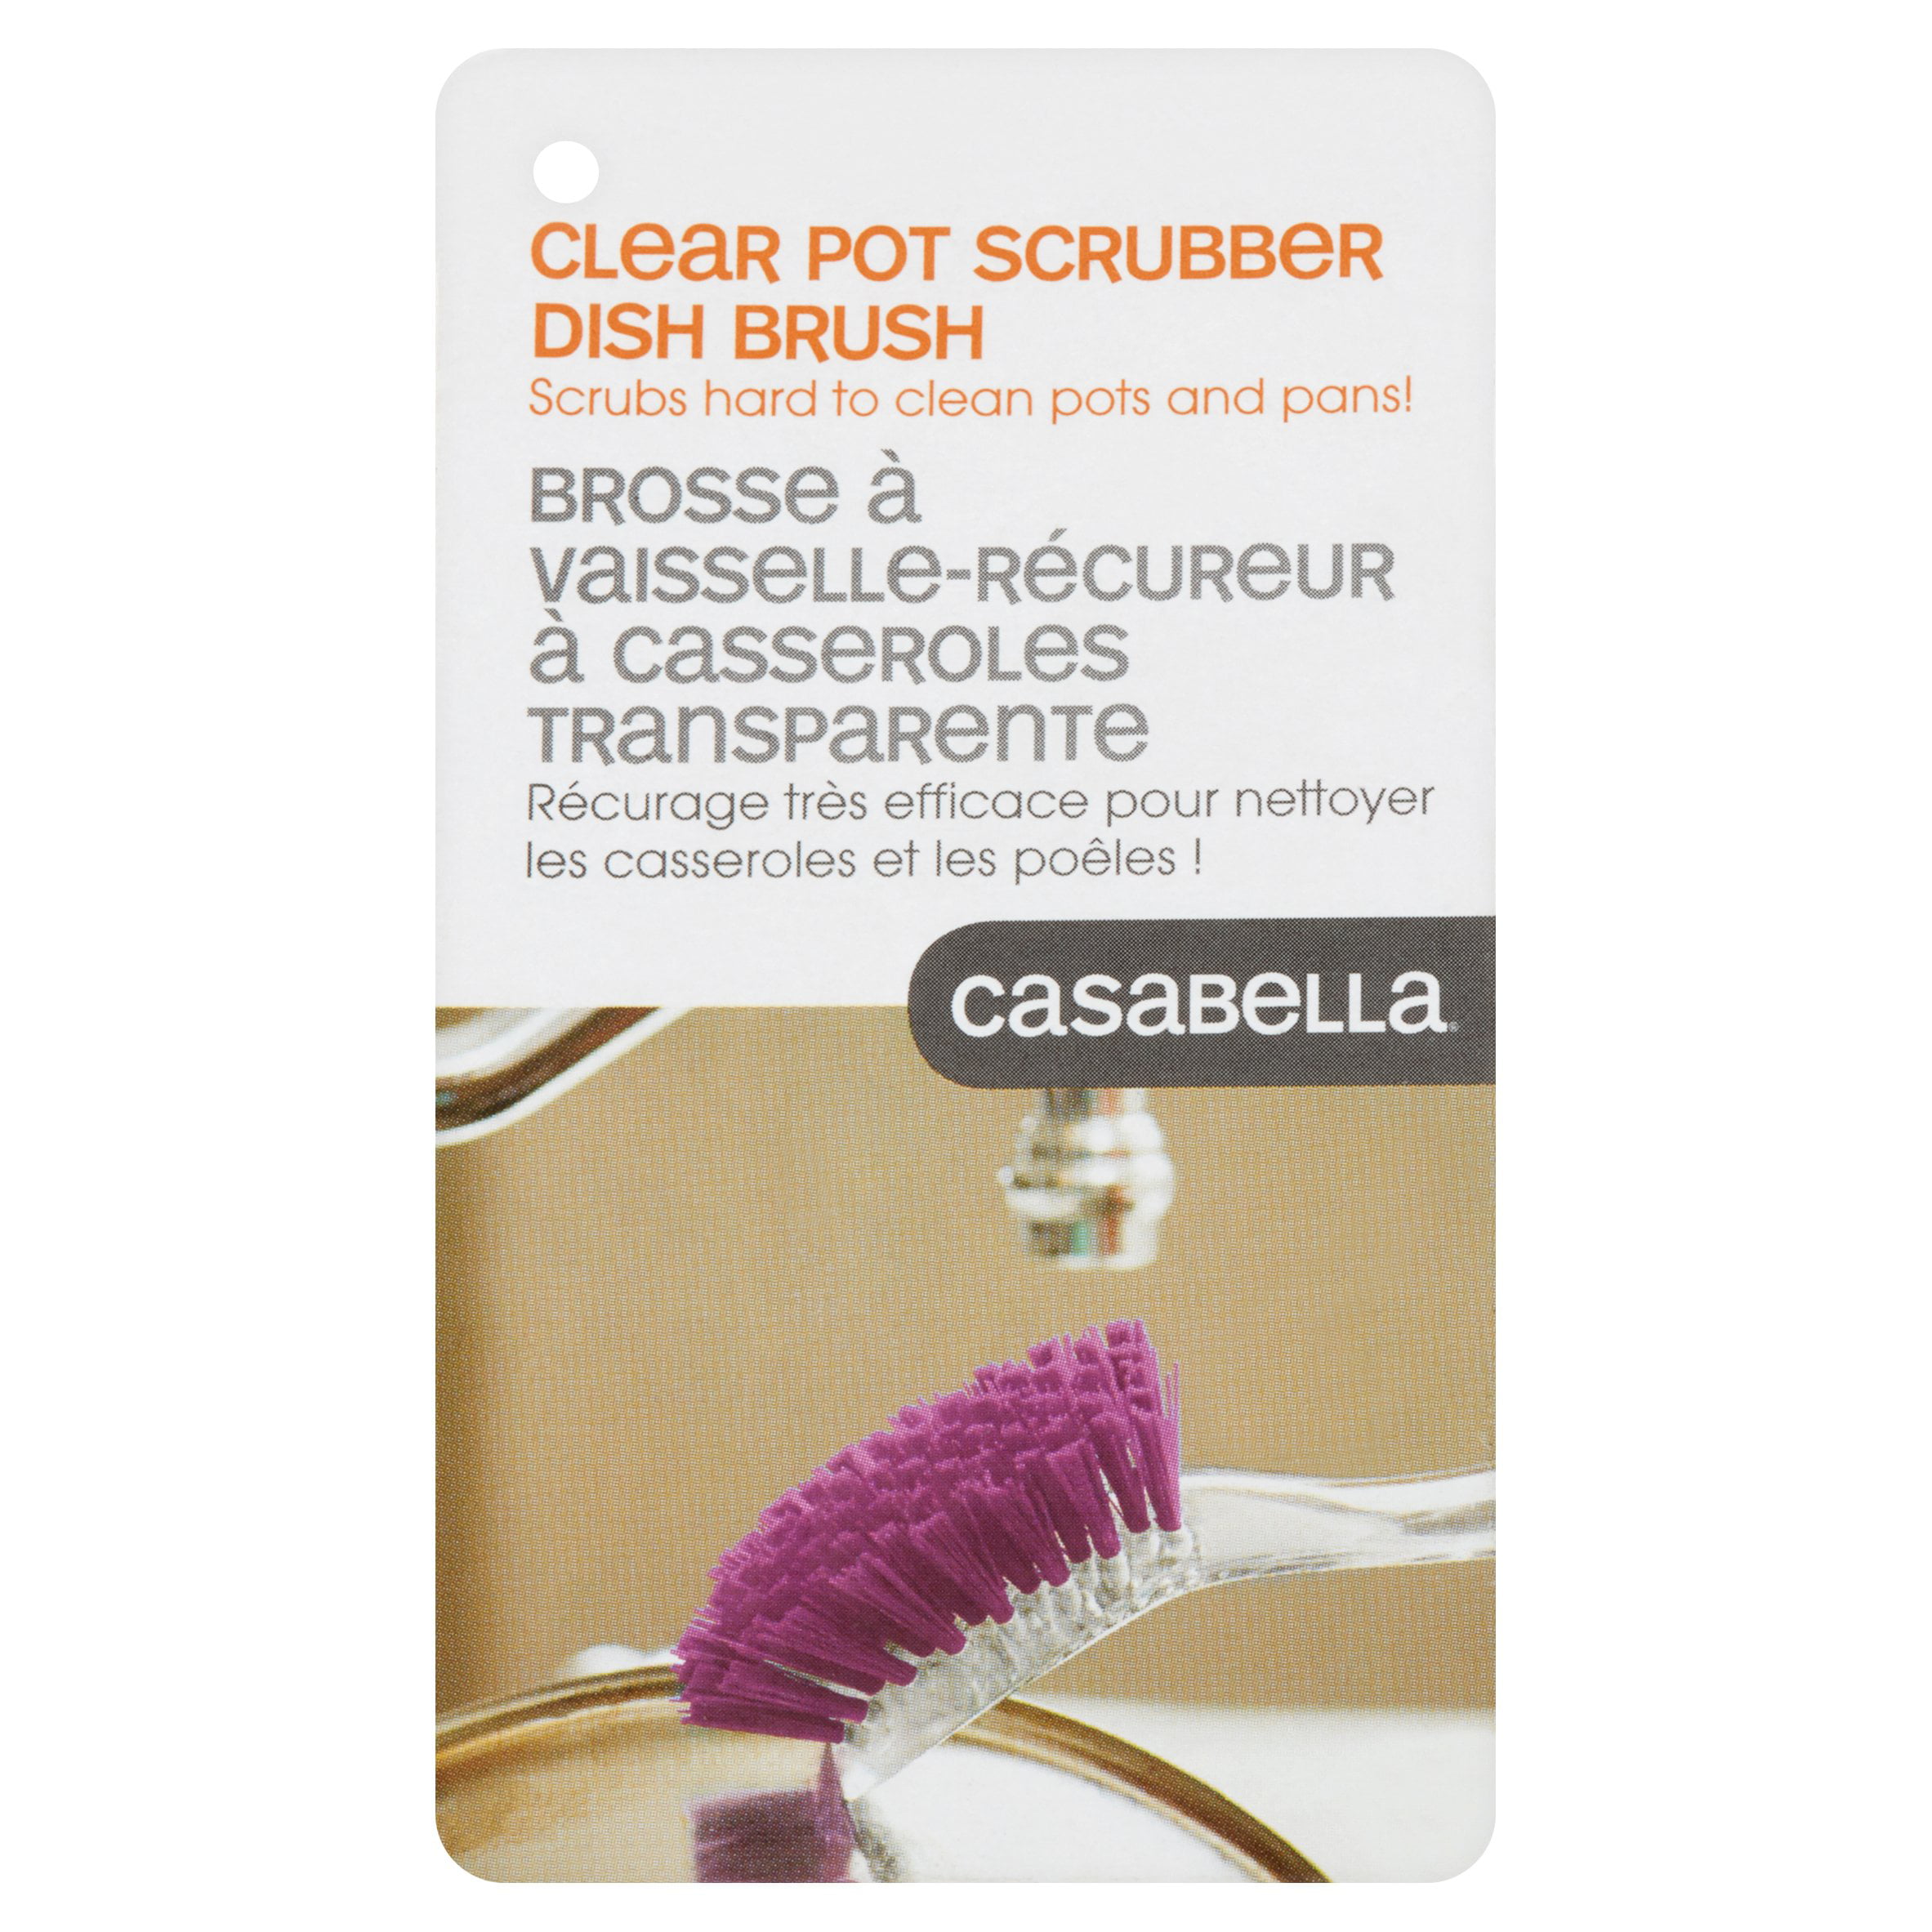 Casabella Smart Scrub Dish Brush Review - Food Fanatic